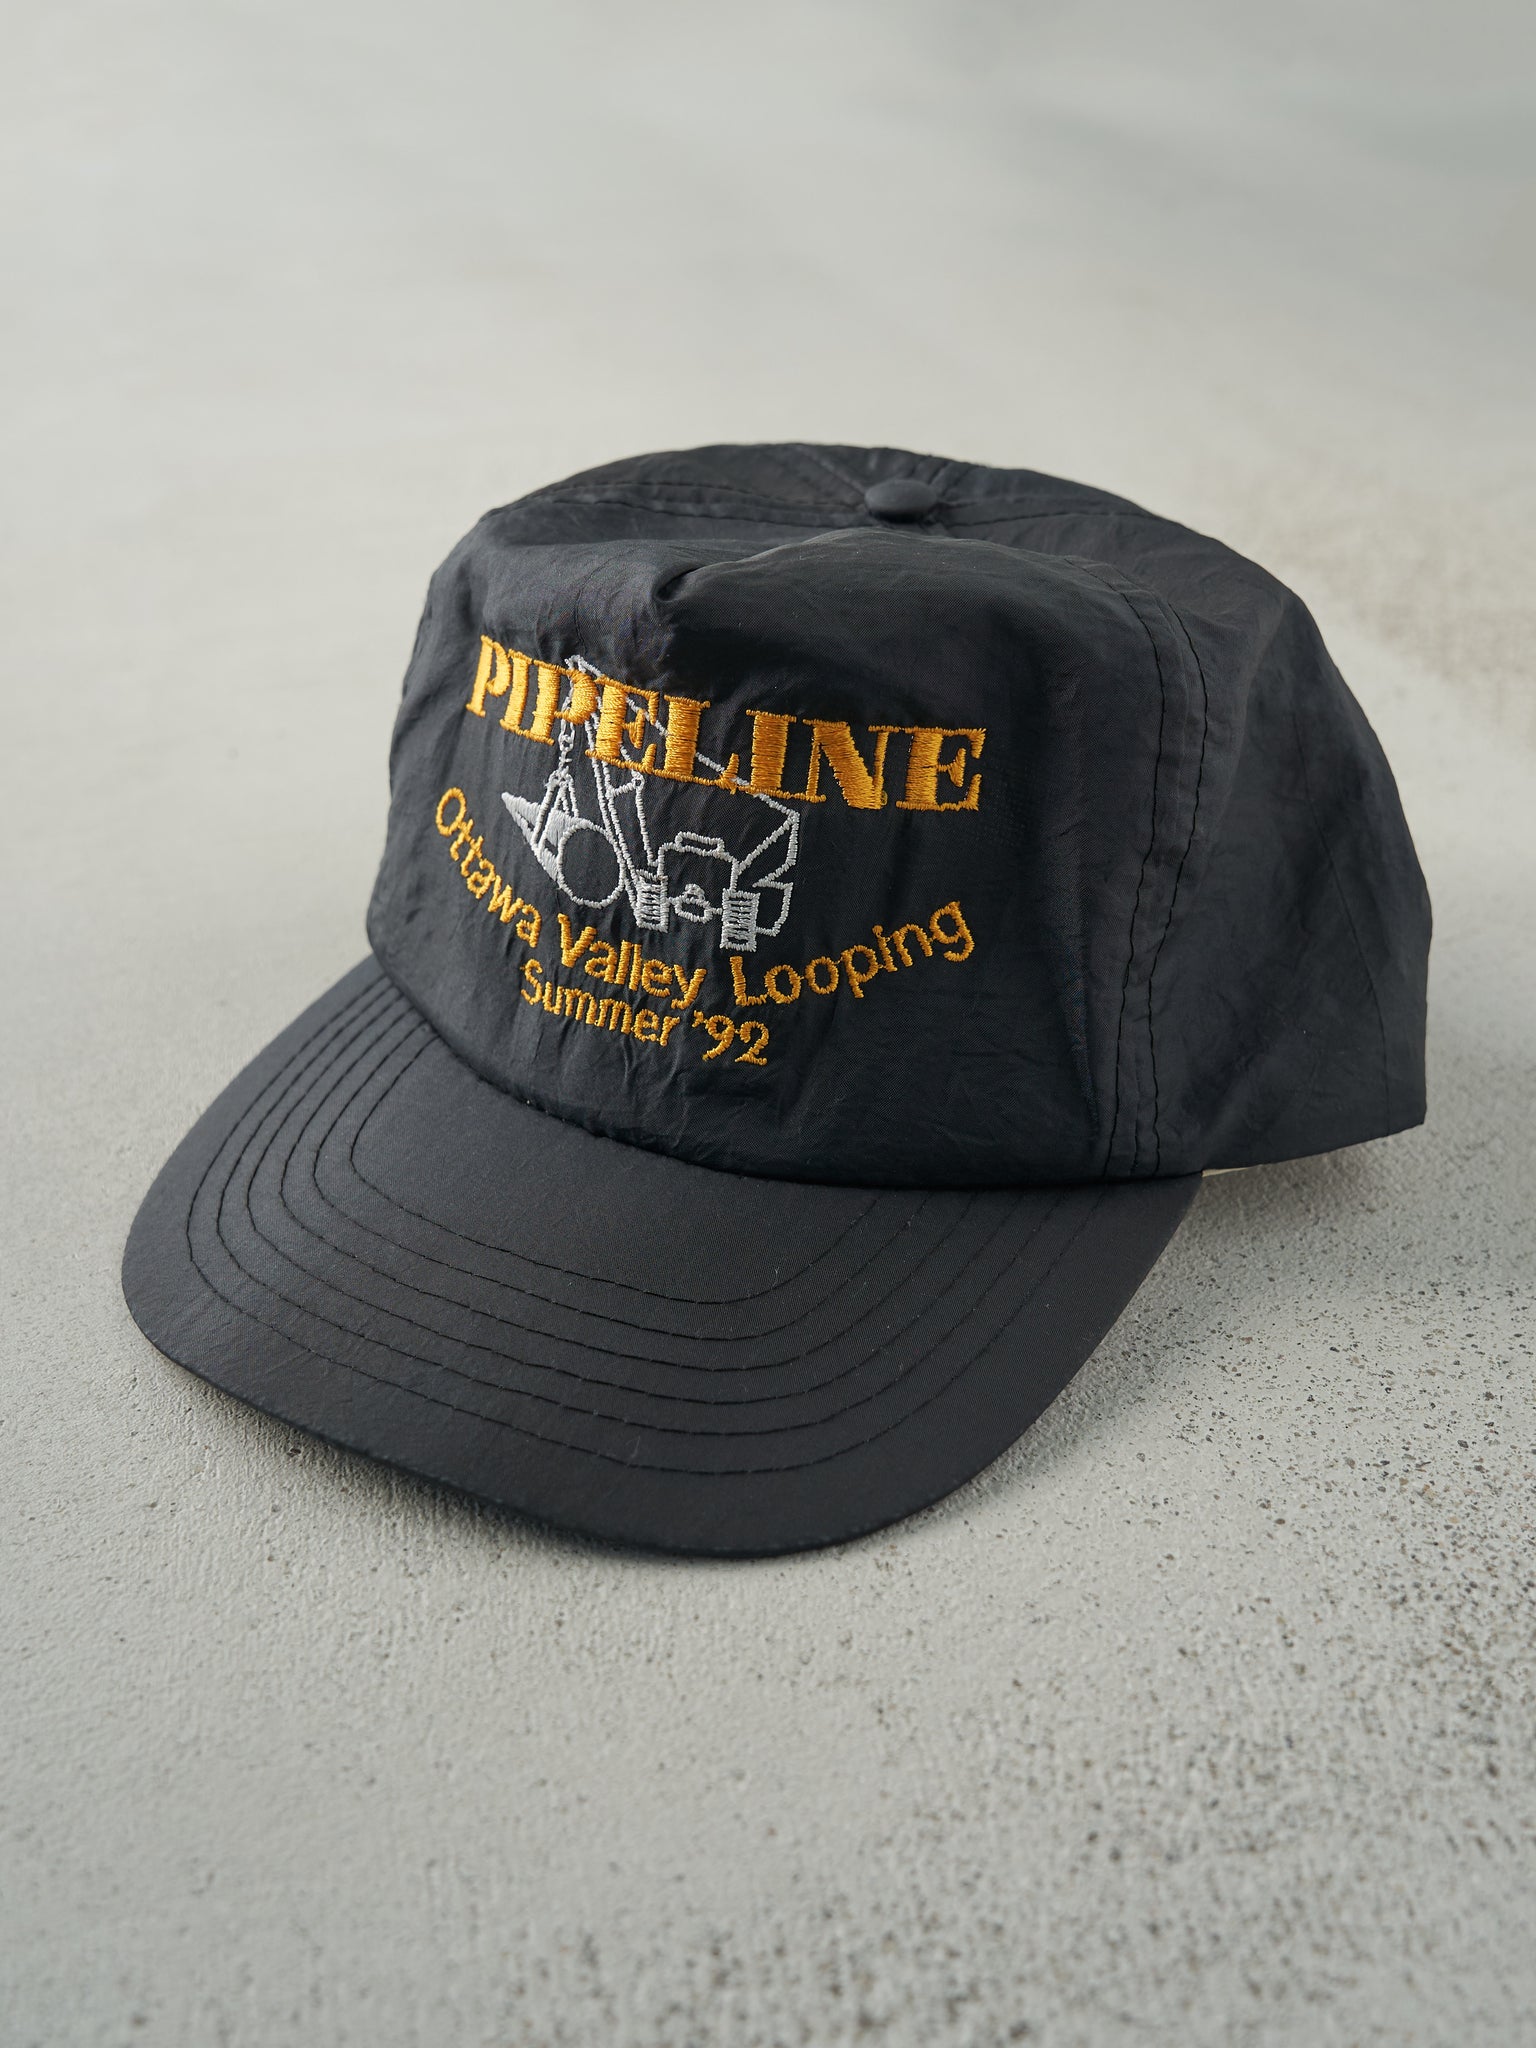 Vintage 92' Black Pipeline Embroidered Nylon Snapback Hat